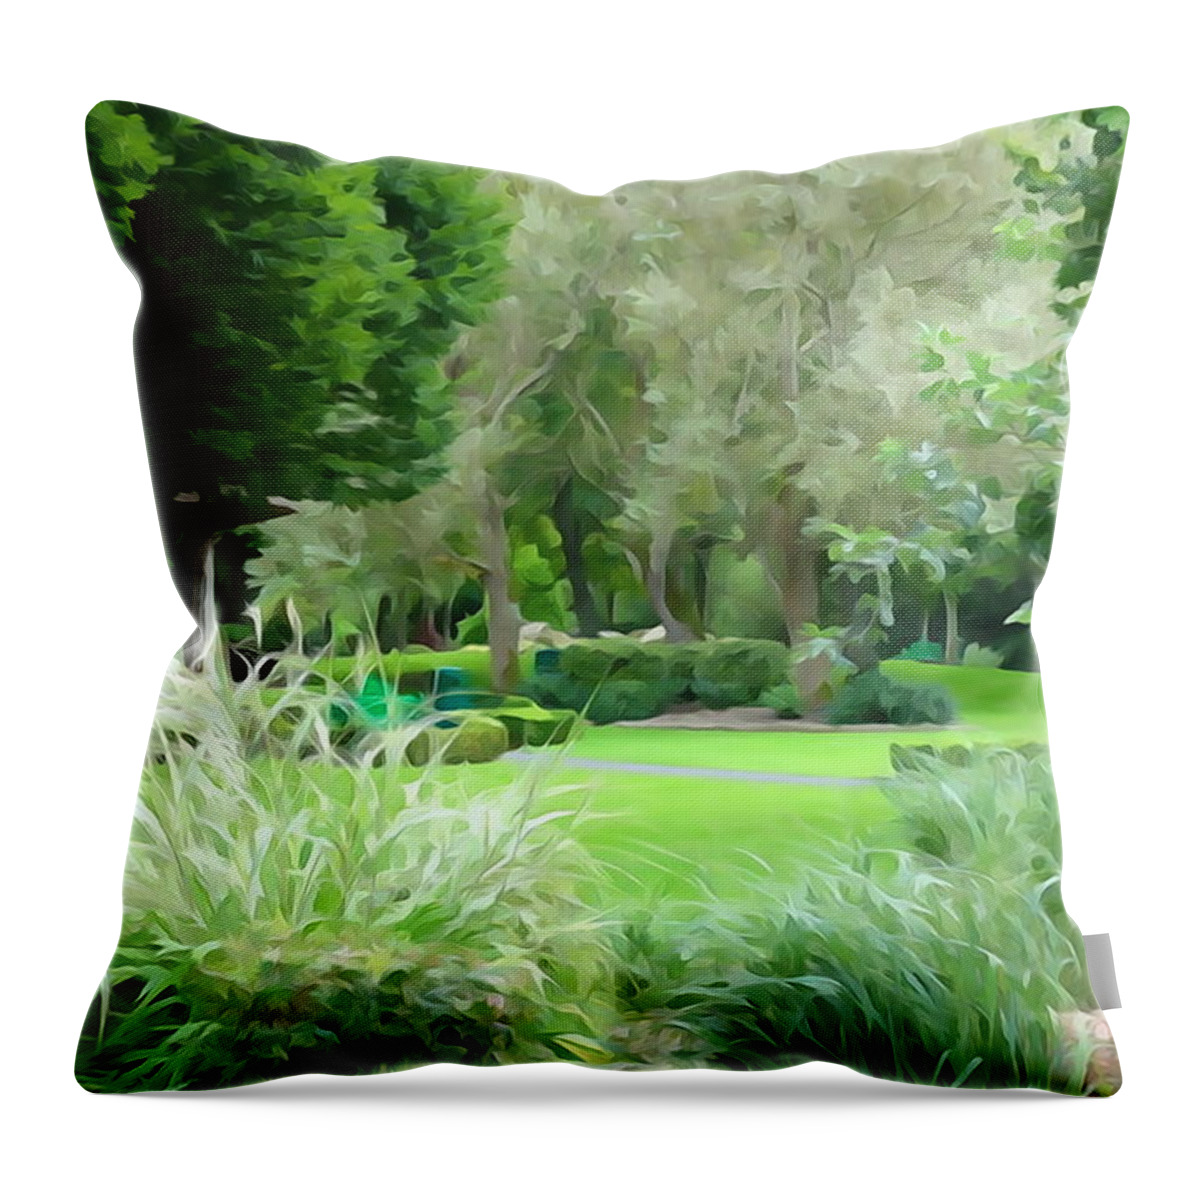 Grass Throw Pillow featuring the photograph Green Gardens by Norma Brock